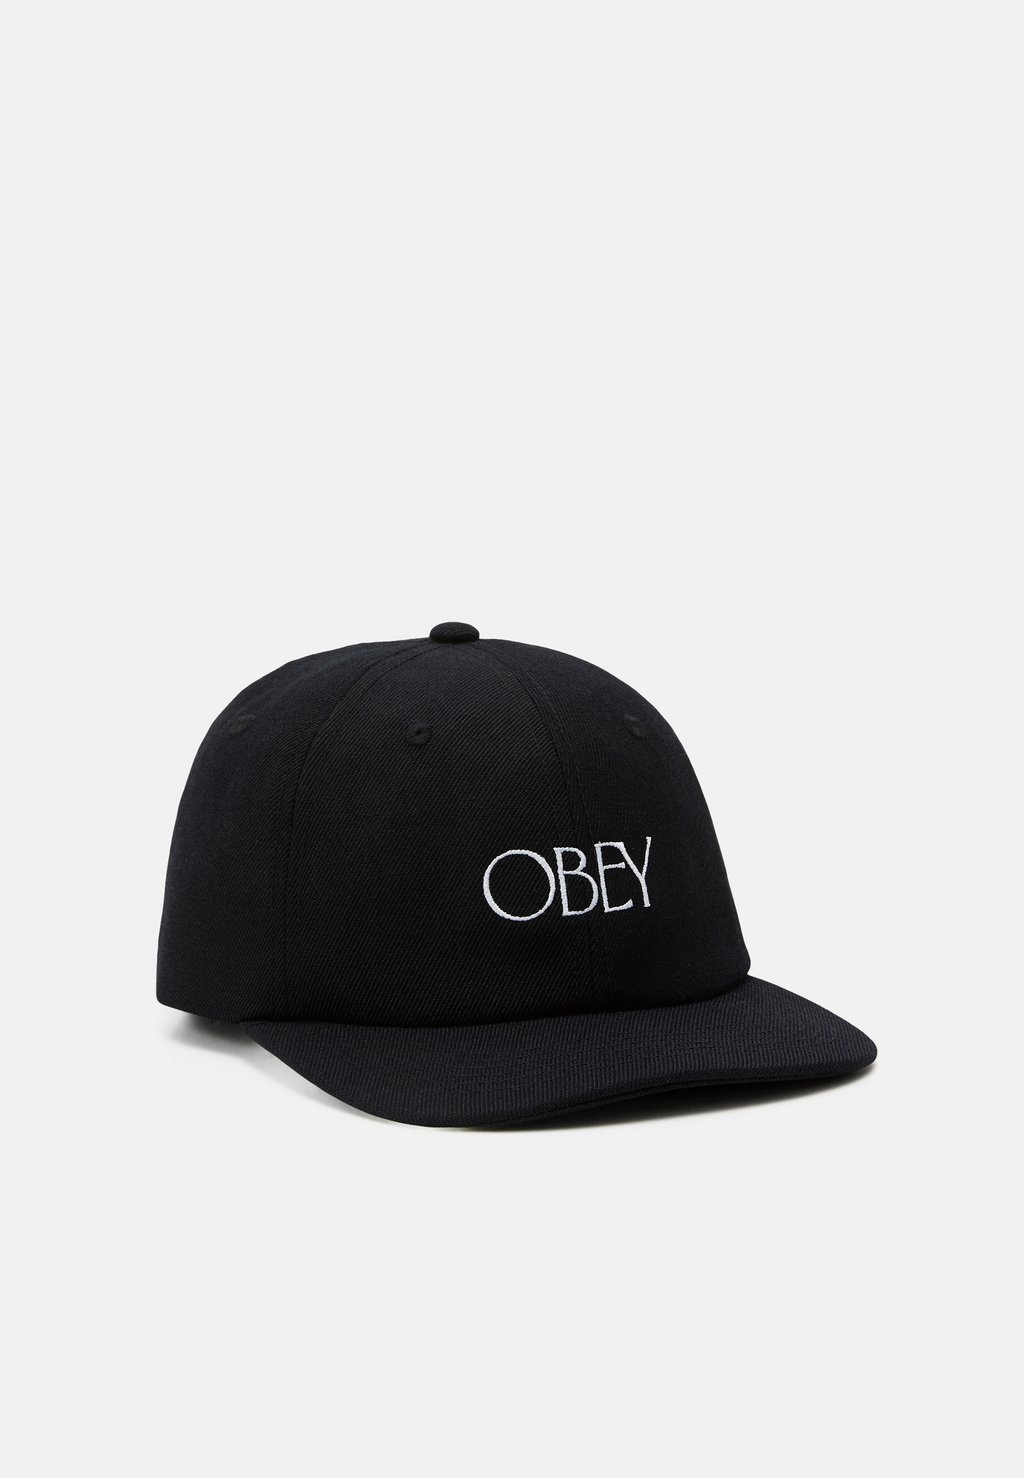 Кепка HEDGES 6 PANEL STRAPBACK UNISEX Obey Clothing, черный кепка hedges 6 panel strapback unisex obey clothing черный